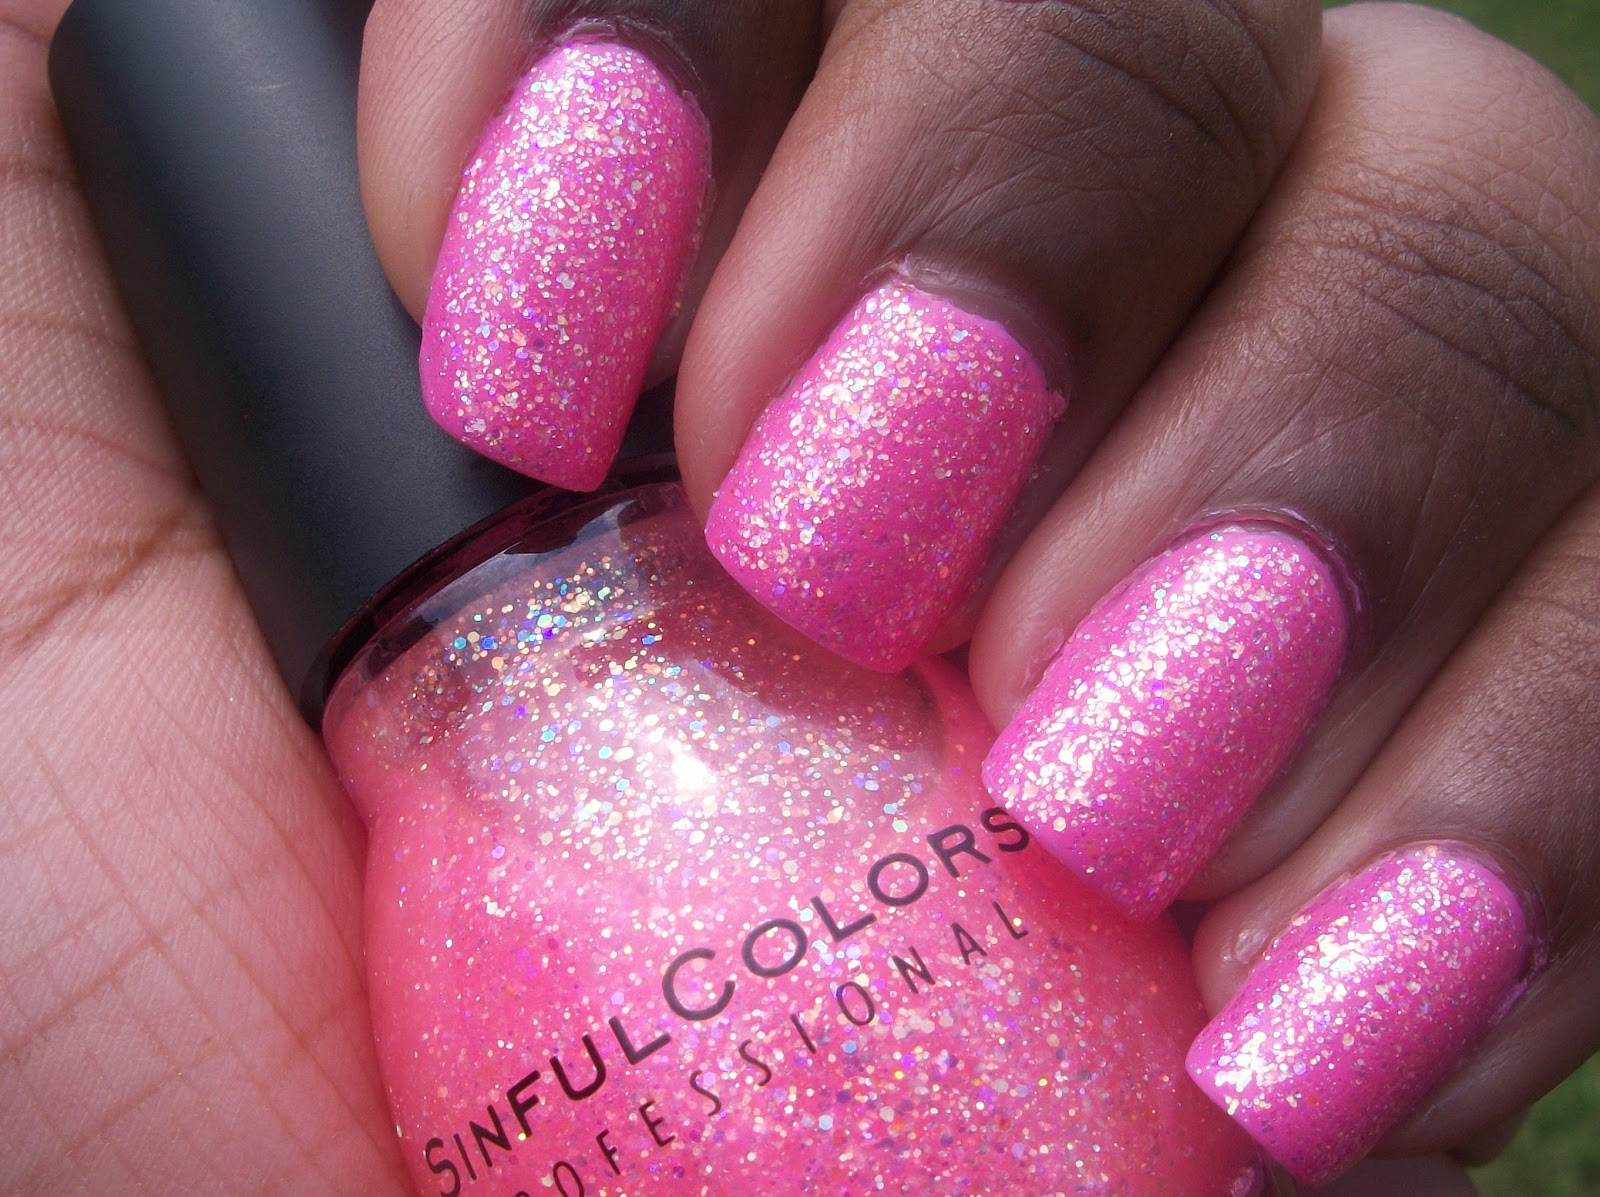 1. Sinful Colors Professional Nail Polish - Pinky Glitter - wide 8